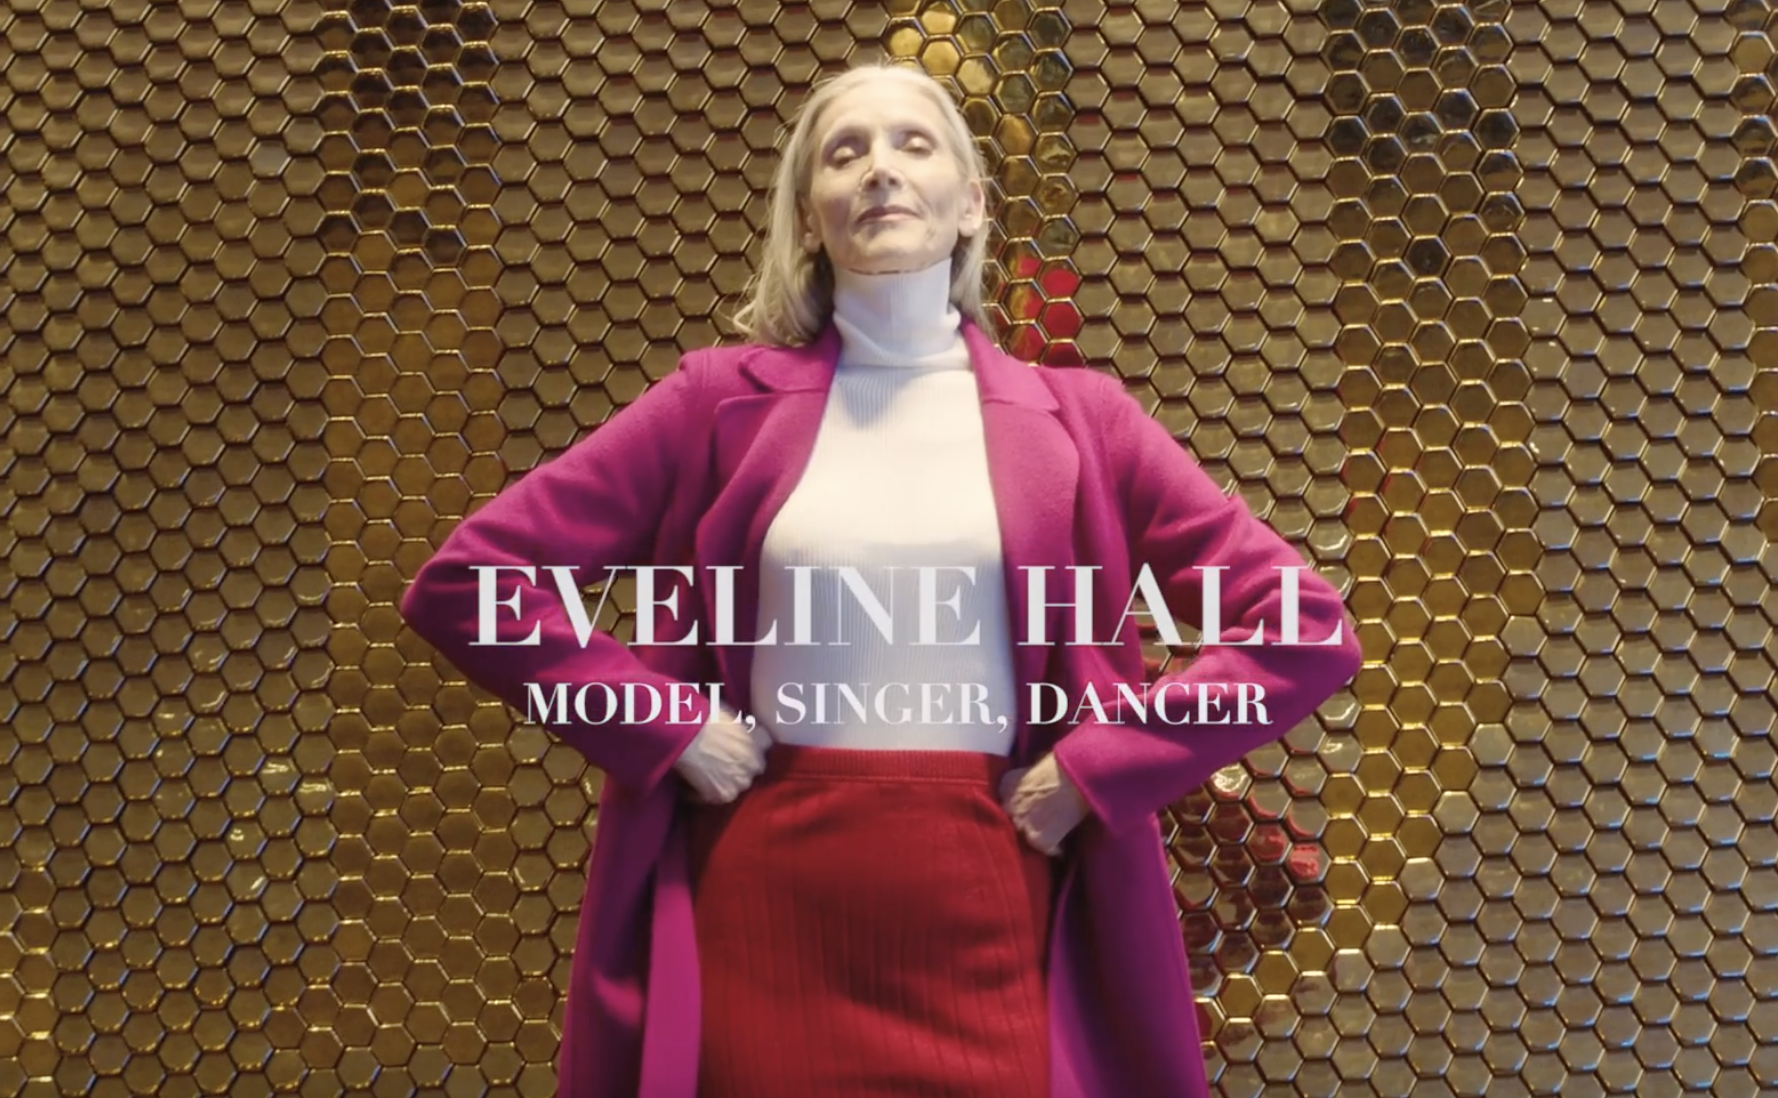 Eveline Hall